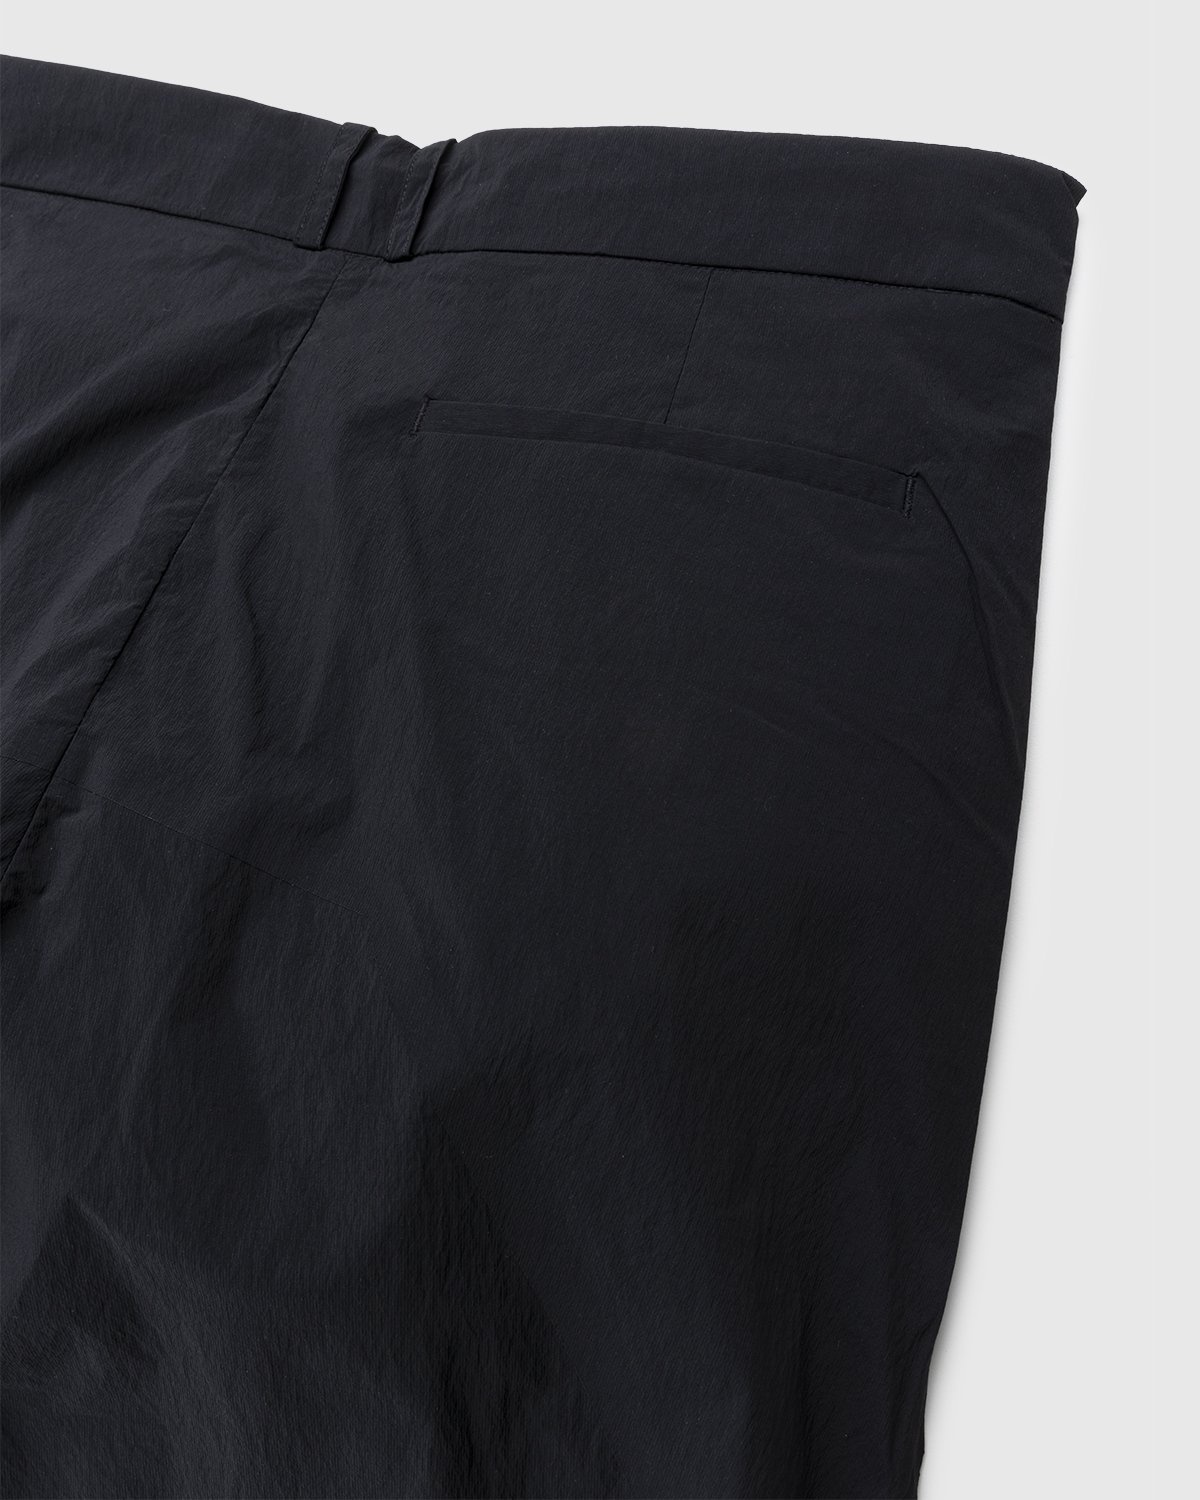 A-Cold-Wall* – Stealth Nylon Pants Black | Highsnobiety Shop